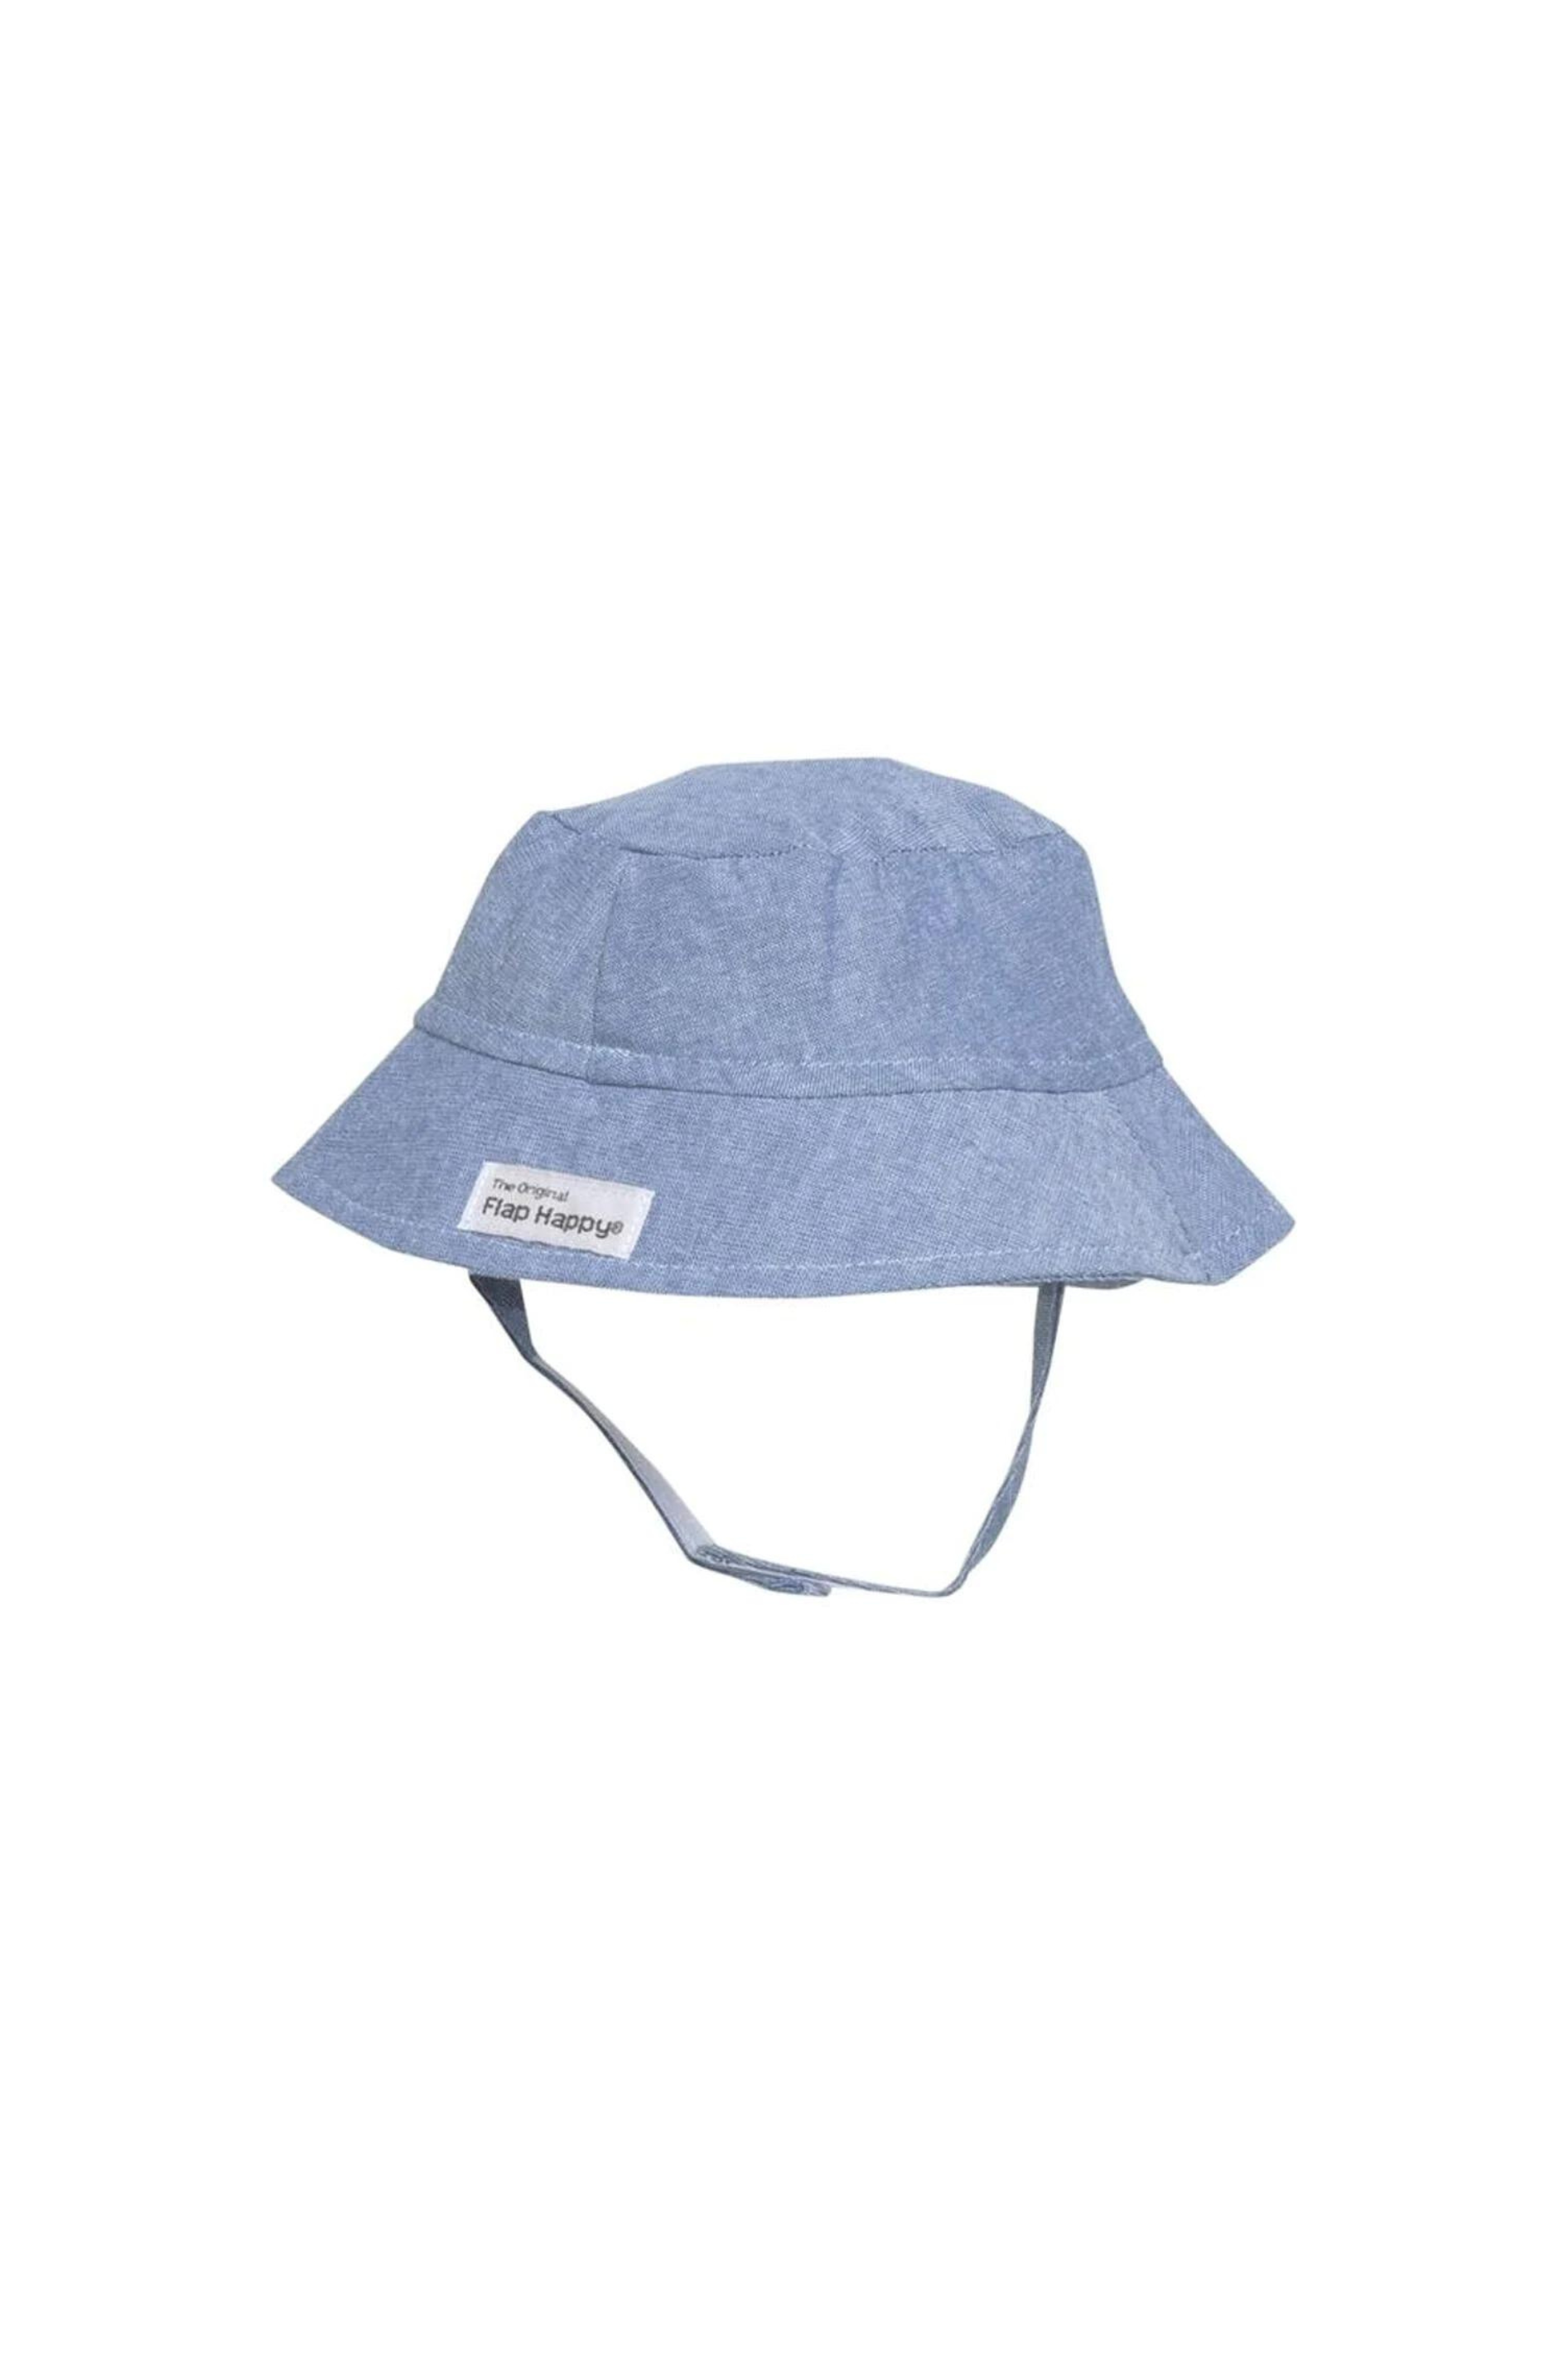 Flap Happy - UPF 50 Bucket Hat - Chambray Denim Infant Babies Sun Hat Large (12-18mo)